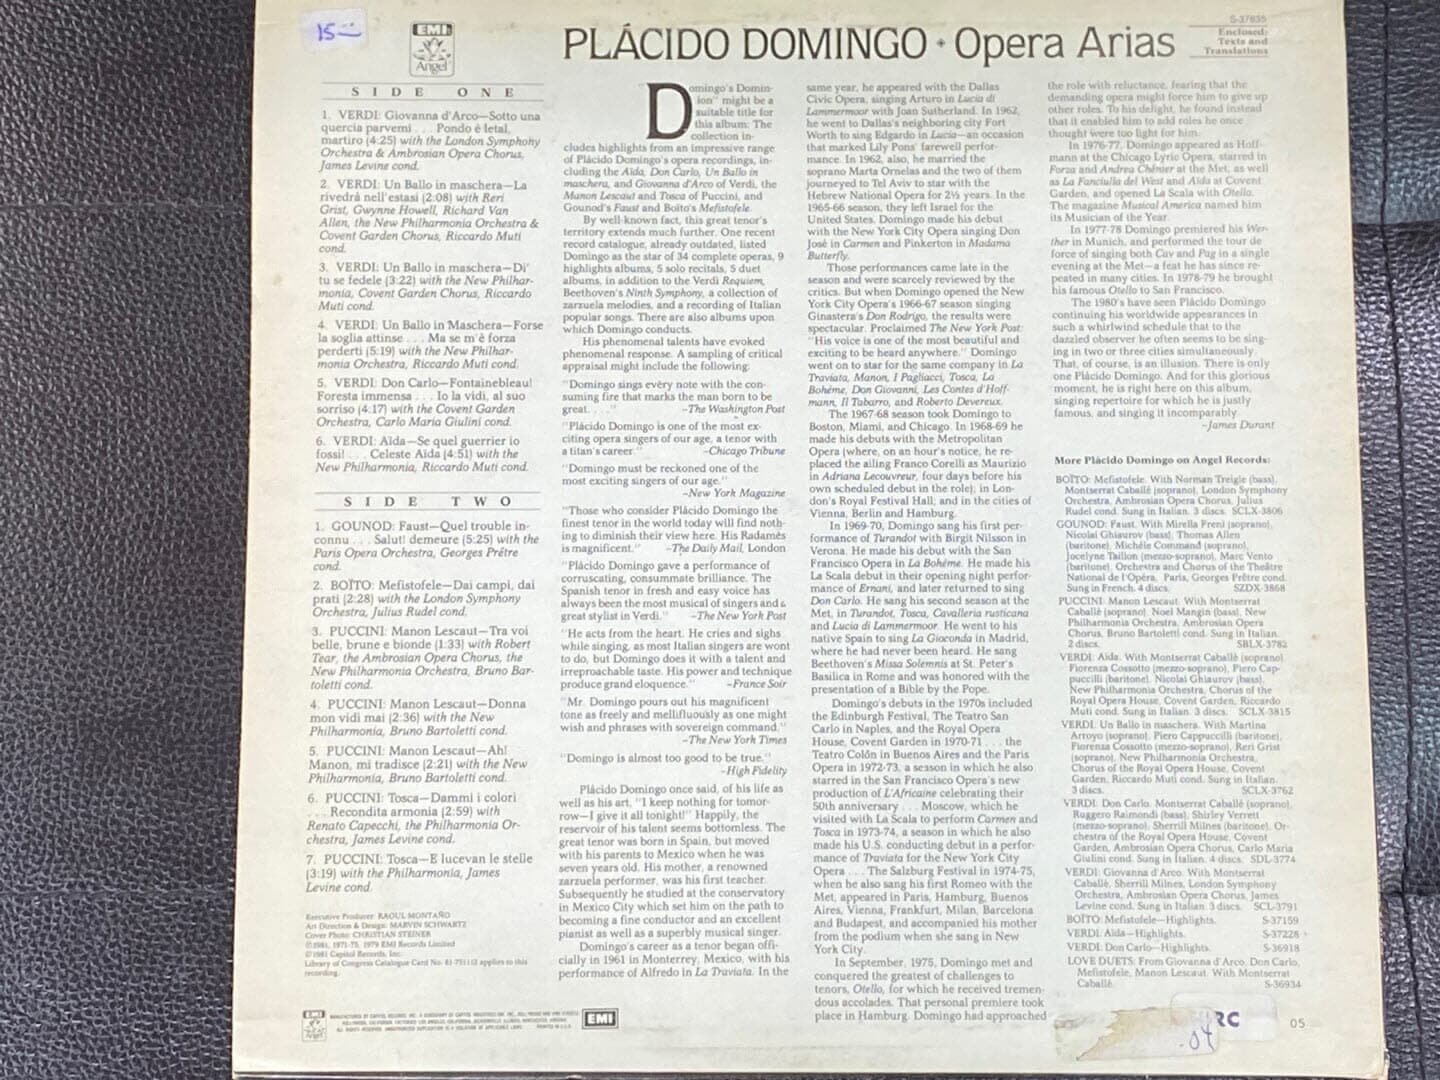 [LP] 플라시도 도밍고 - Placido Domingo - Opera Arias [U.S반]